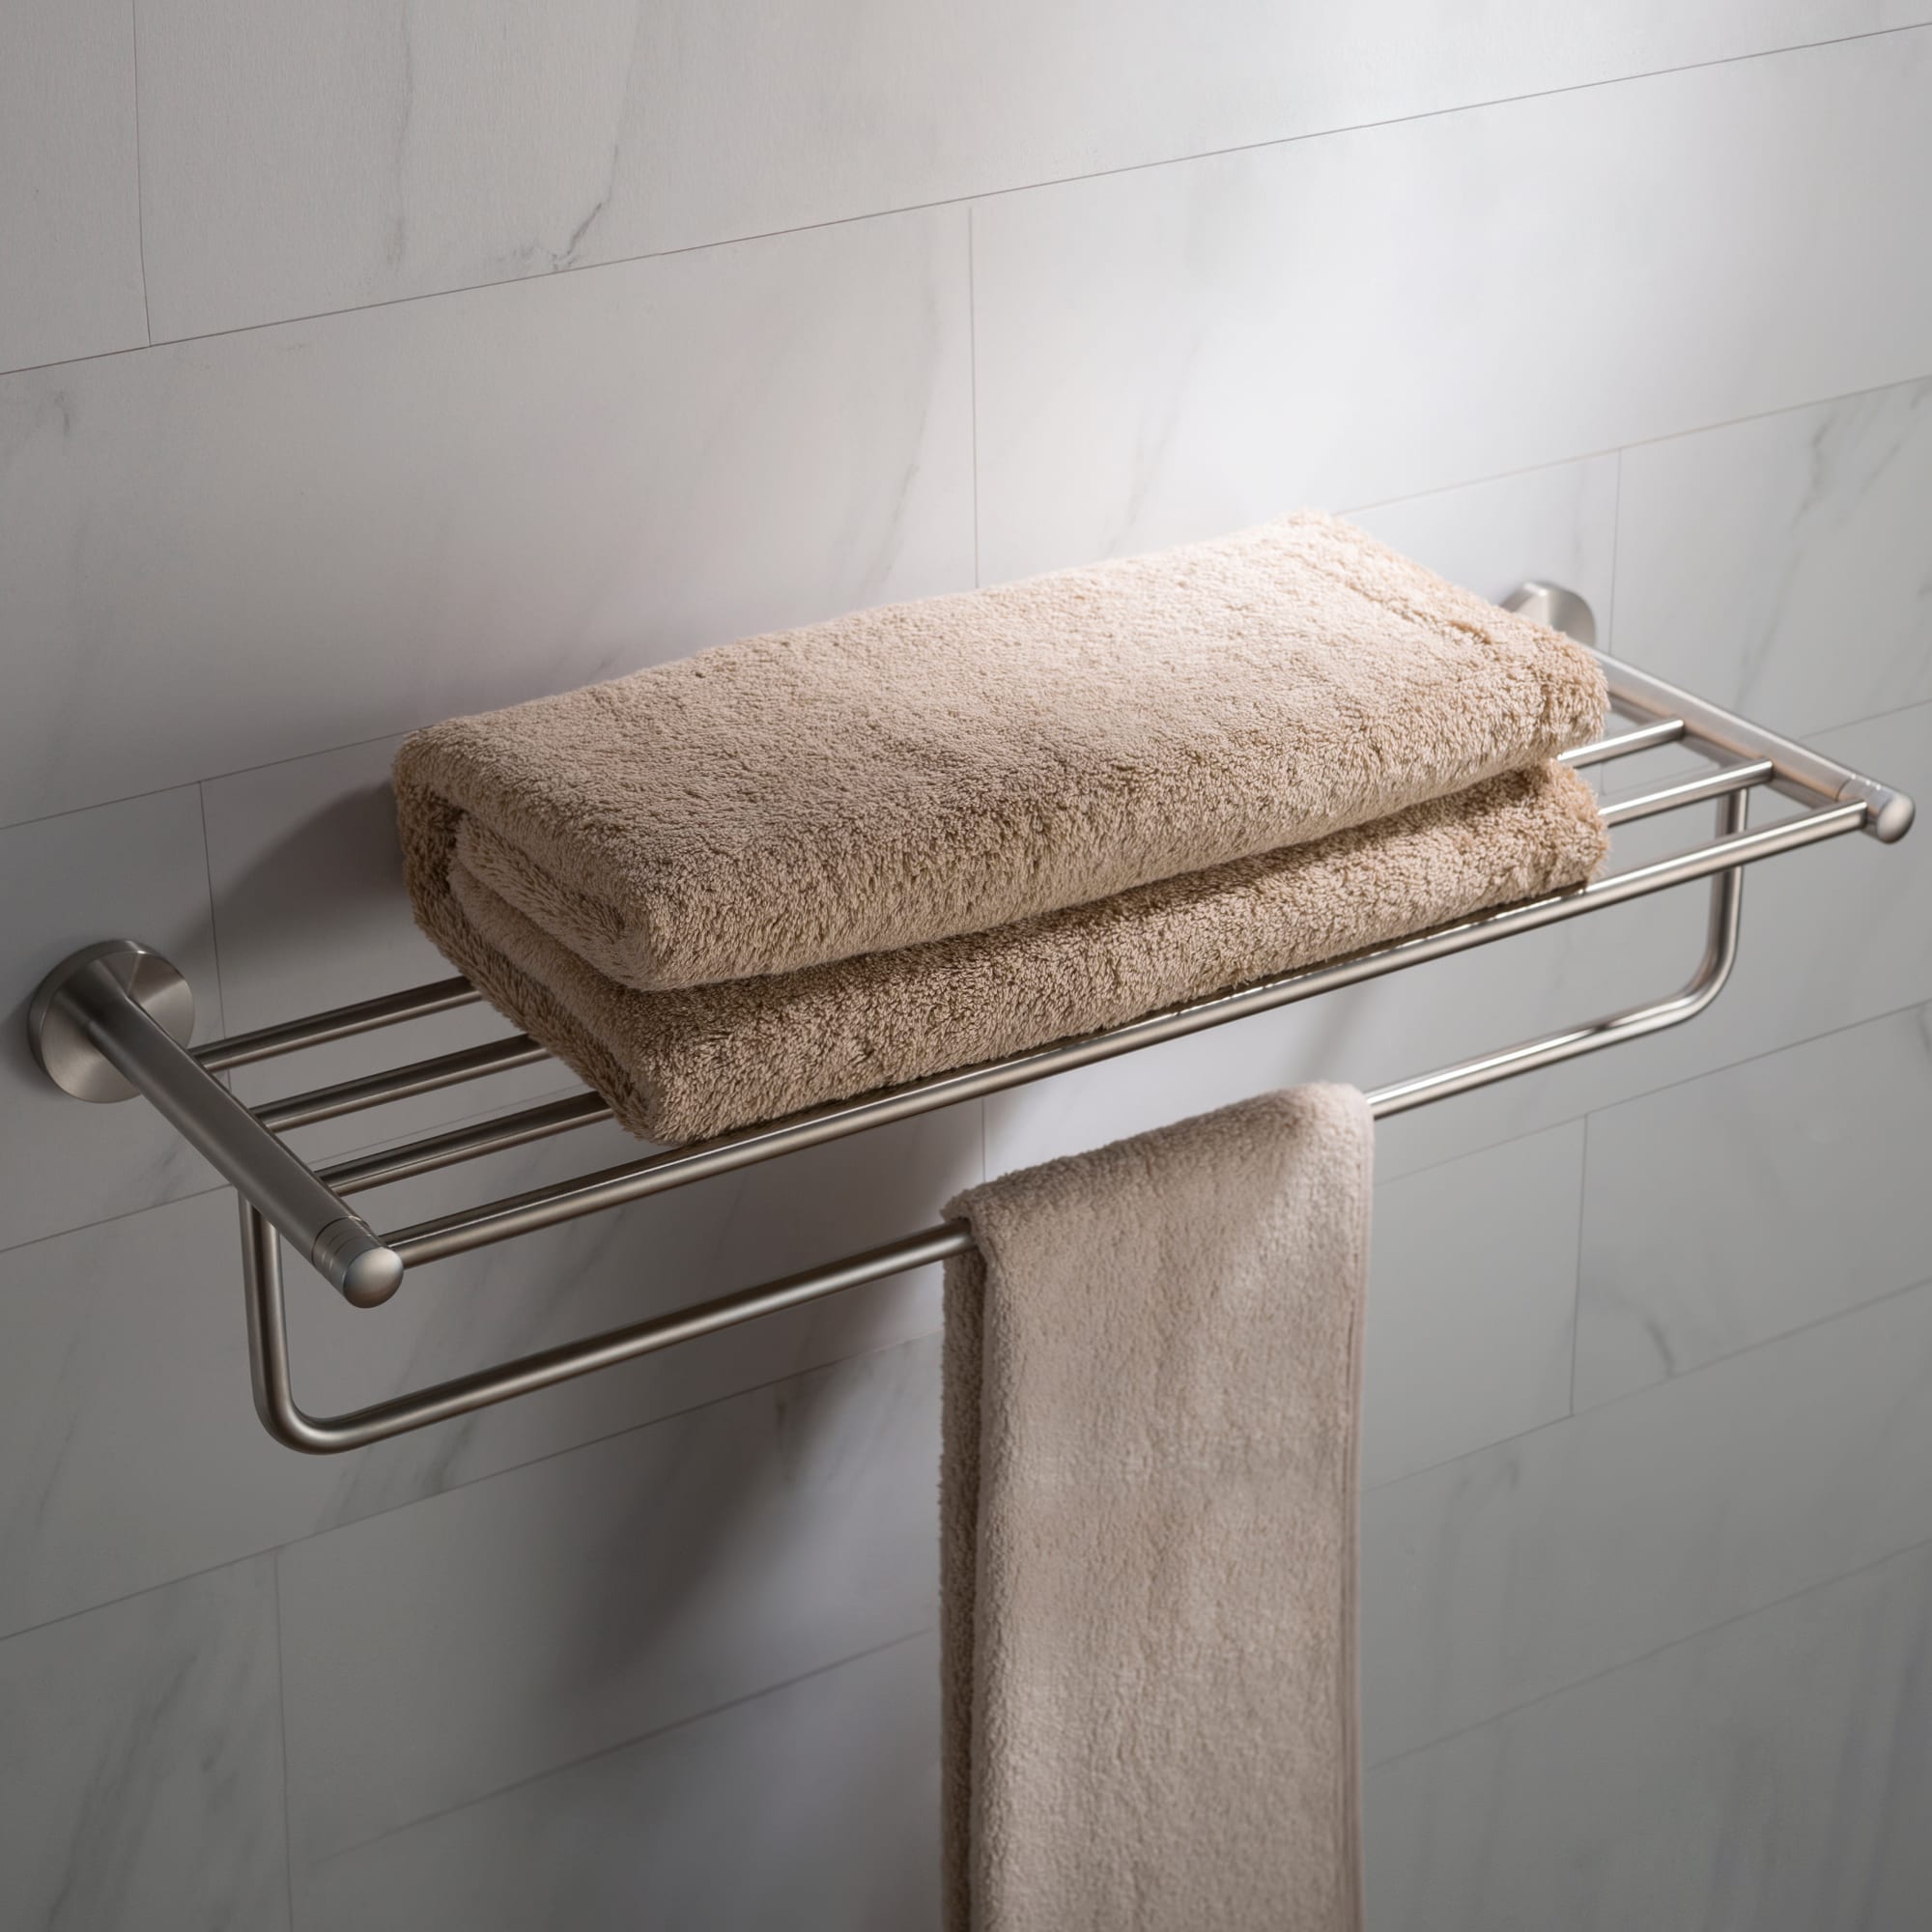 KRAUS Elie Bathroom Shelf with Towel Bar, Chrome Finish, KEA-18842CH - 5